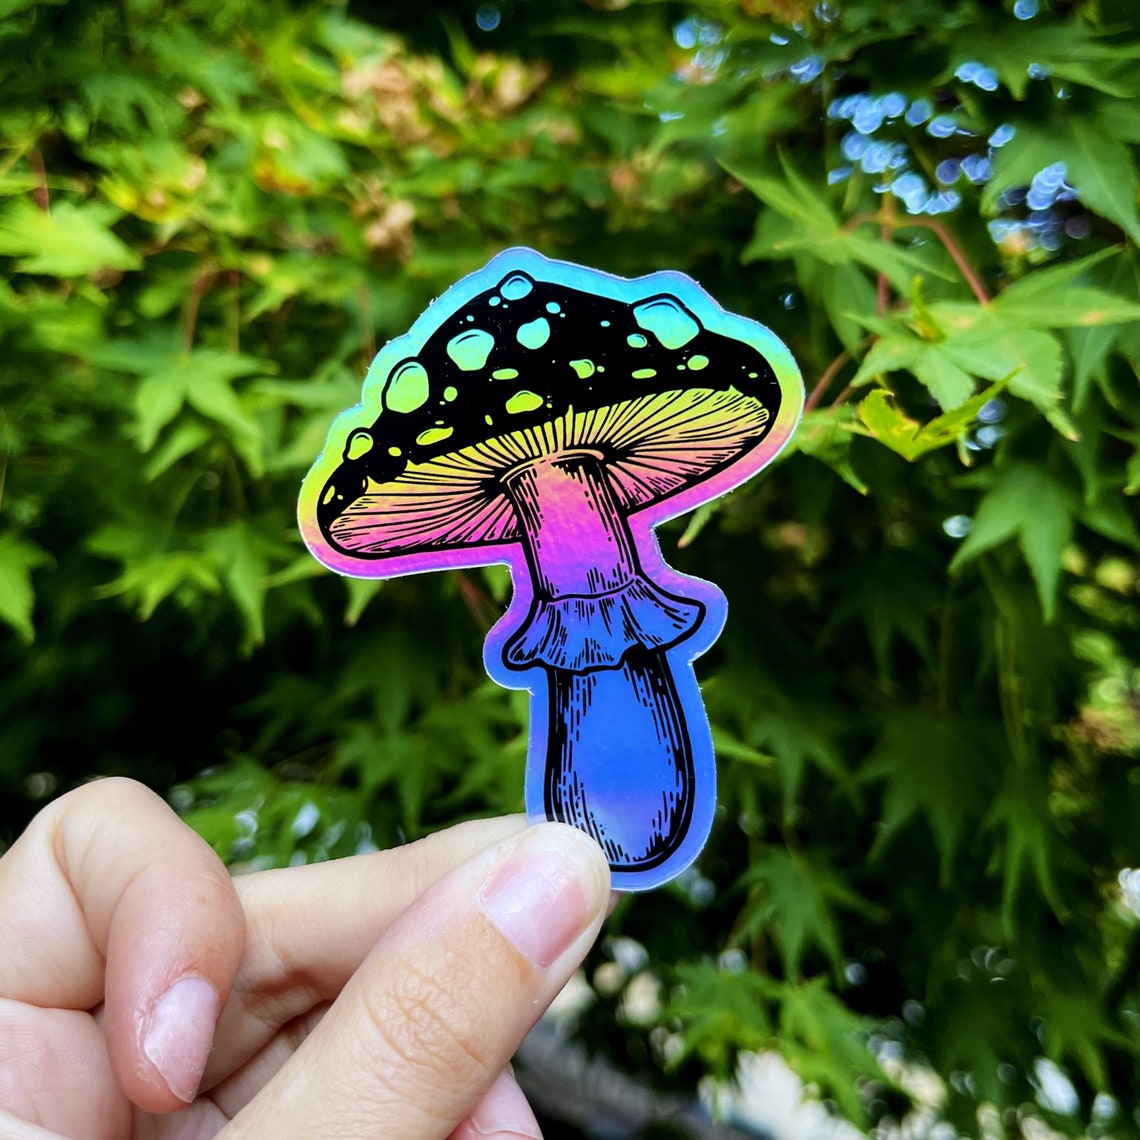 Holographic Mushroom Die Cut Vinyl Sticker Mushroom Decal Etsy